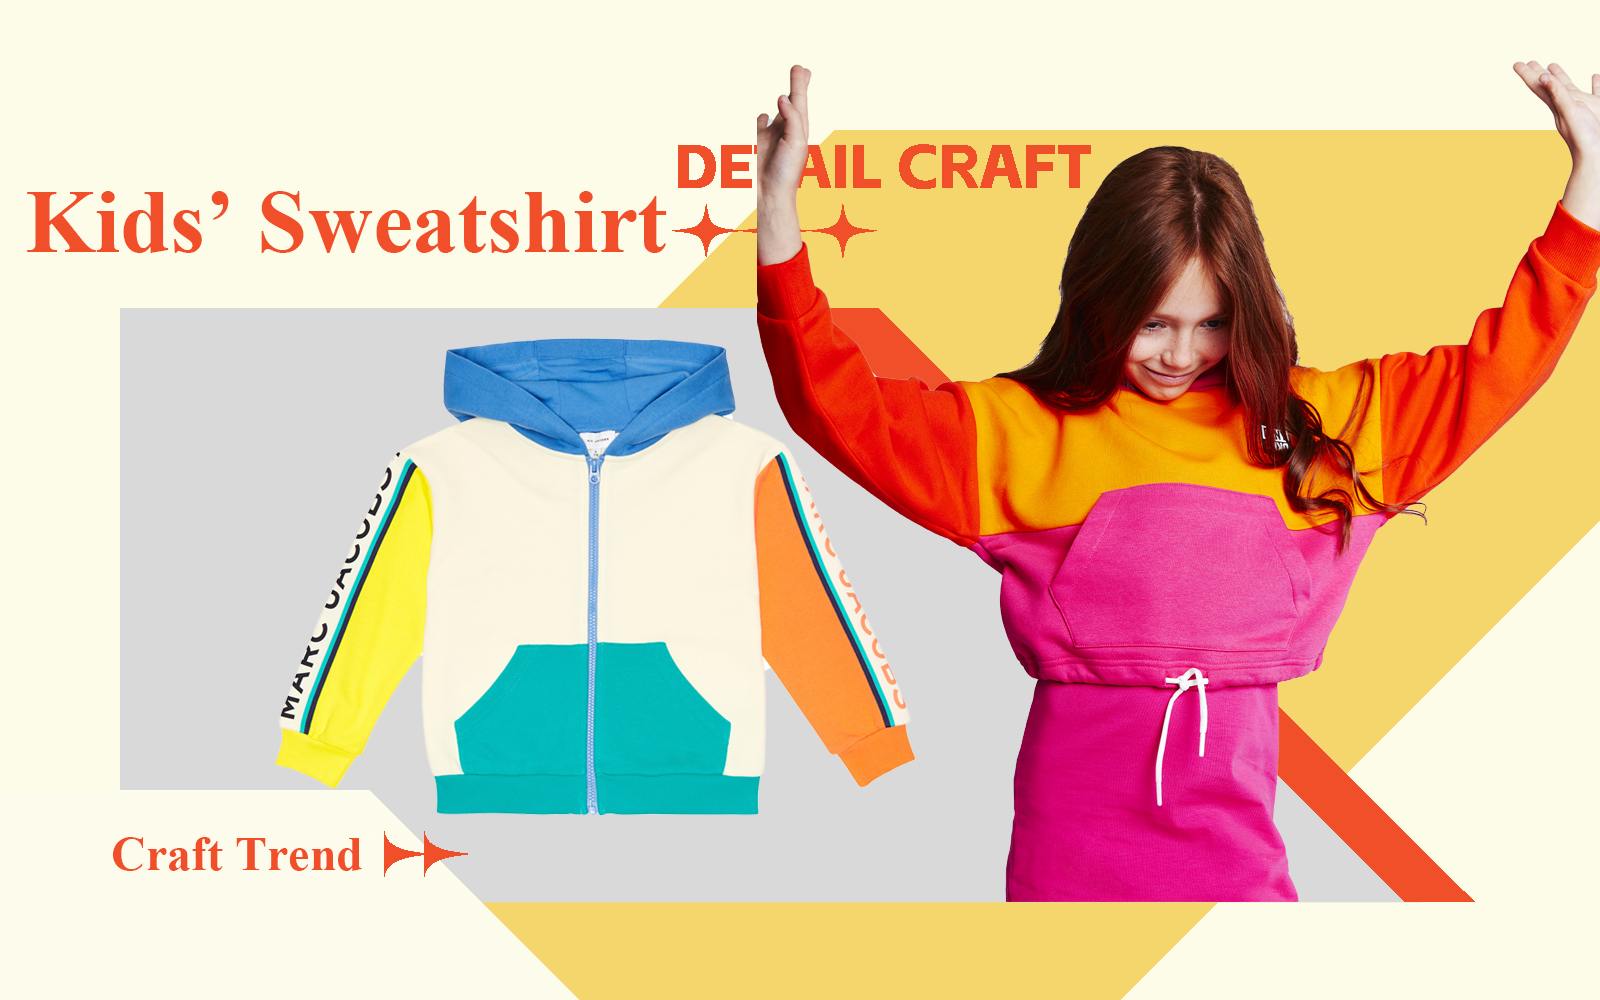 The Detail & Craft Trend for Kids' Sweatshirt